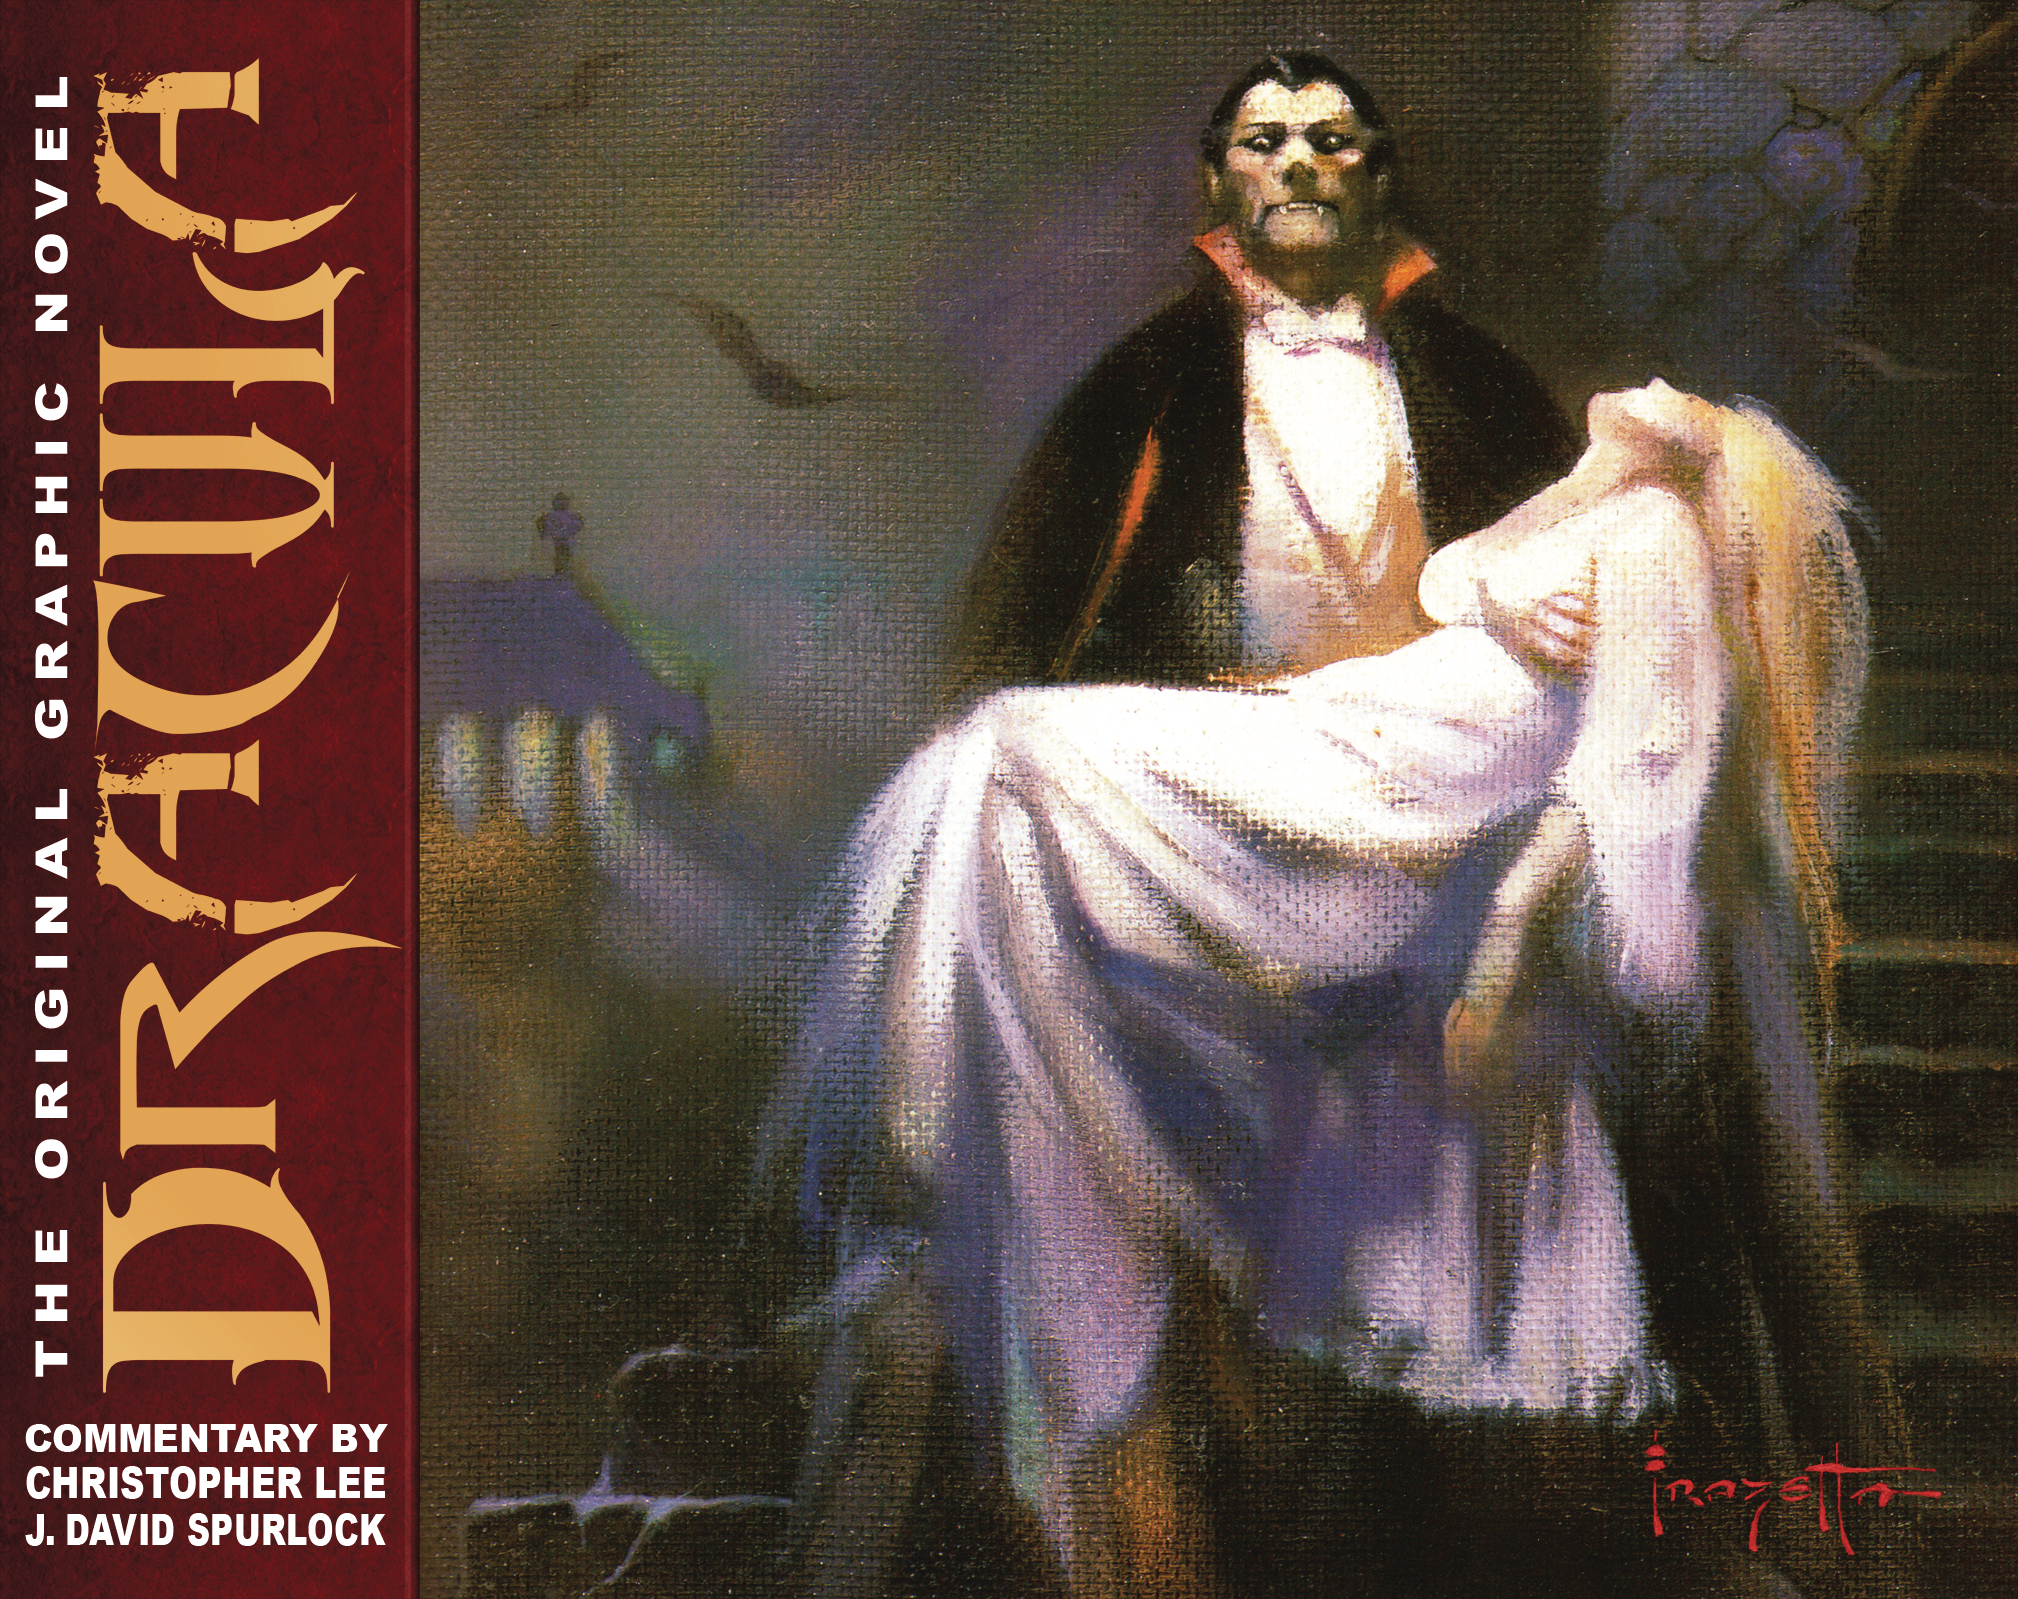 Dracula Original Hardcover Graphic Novel